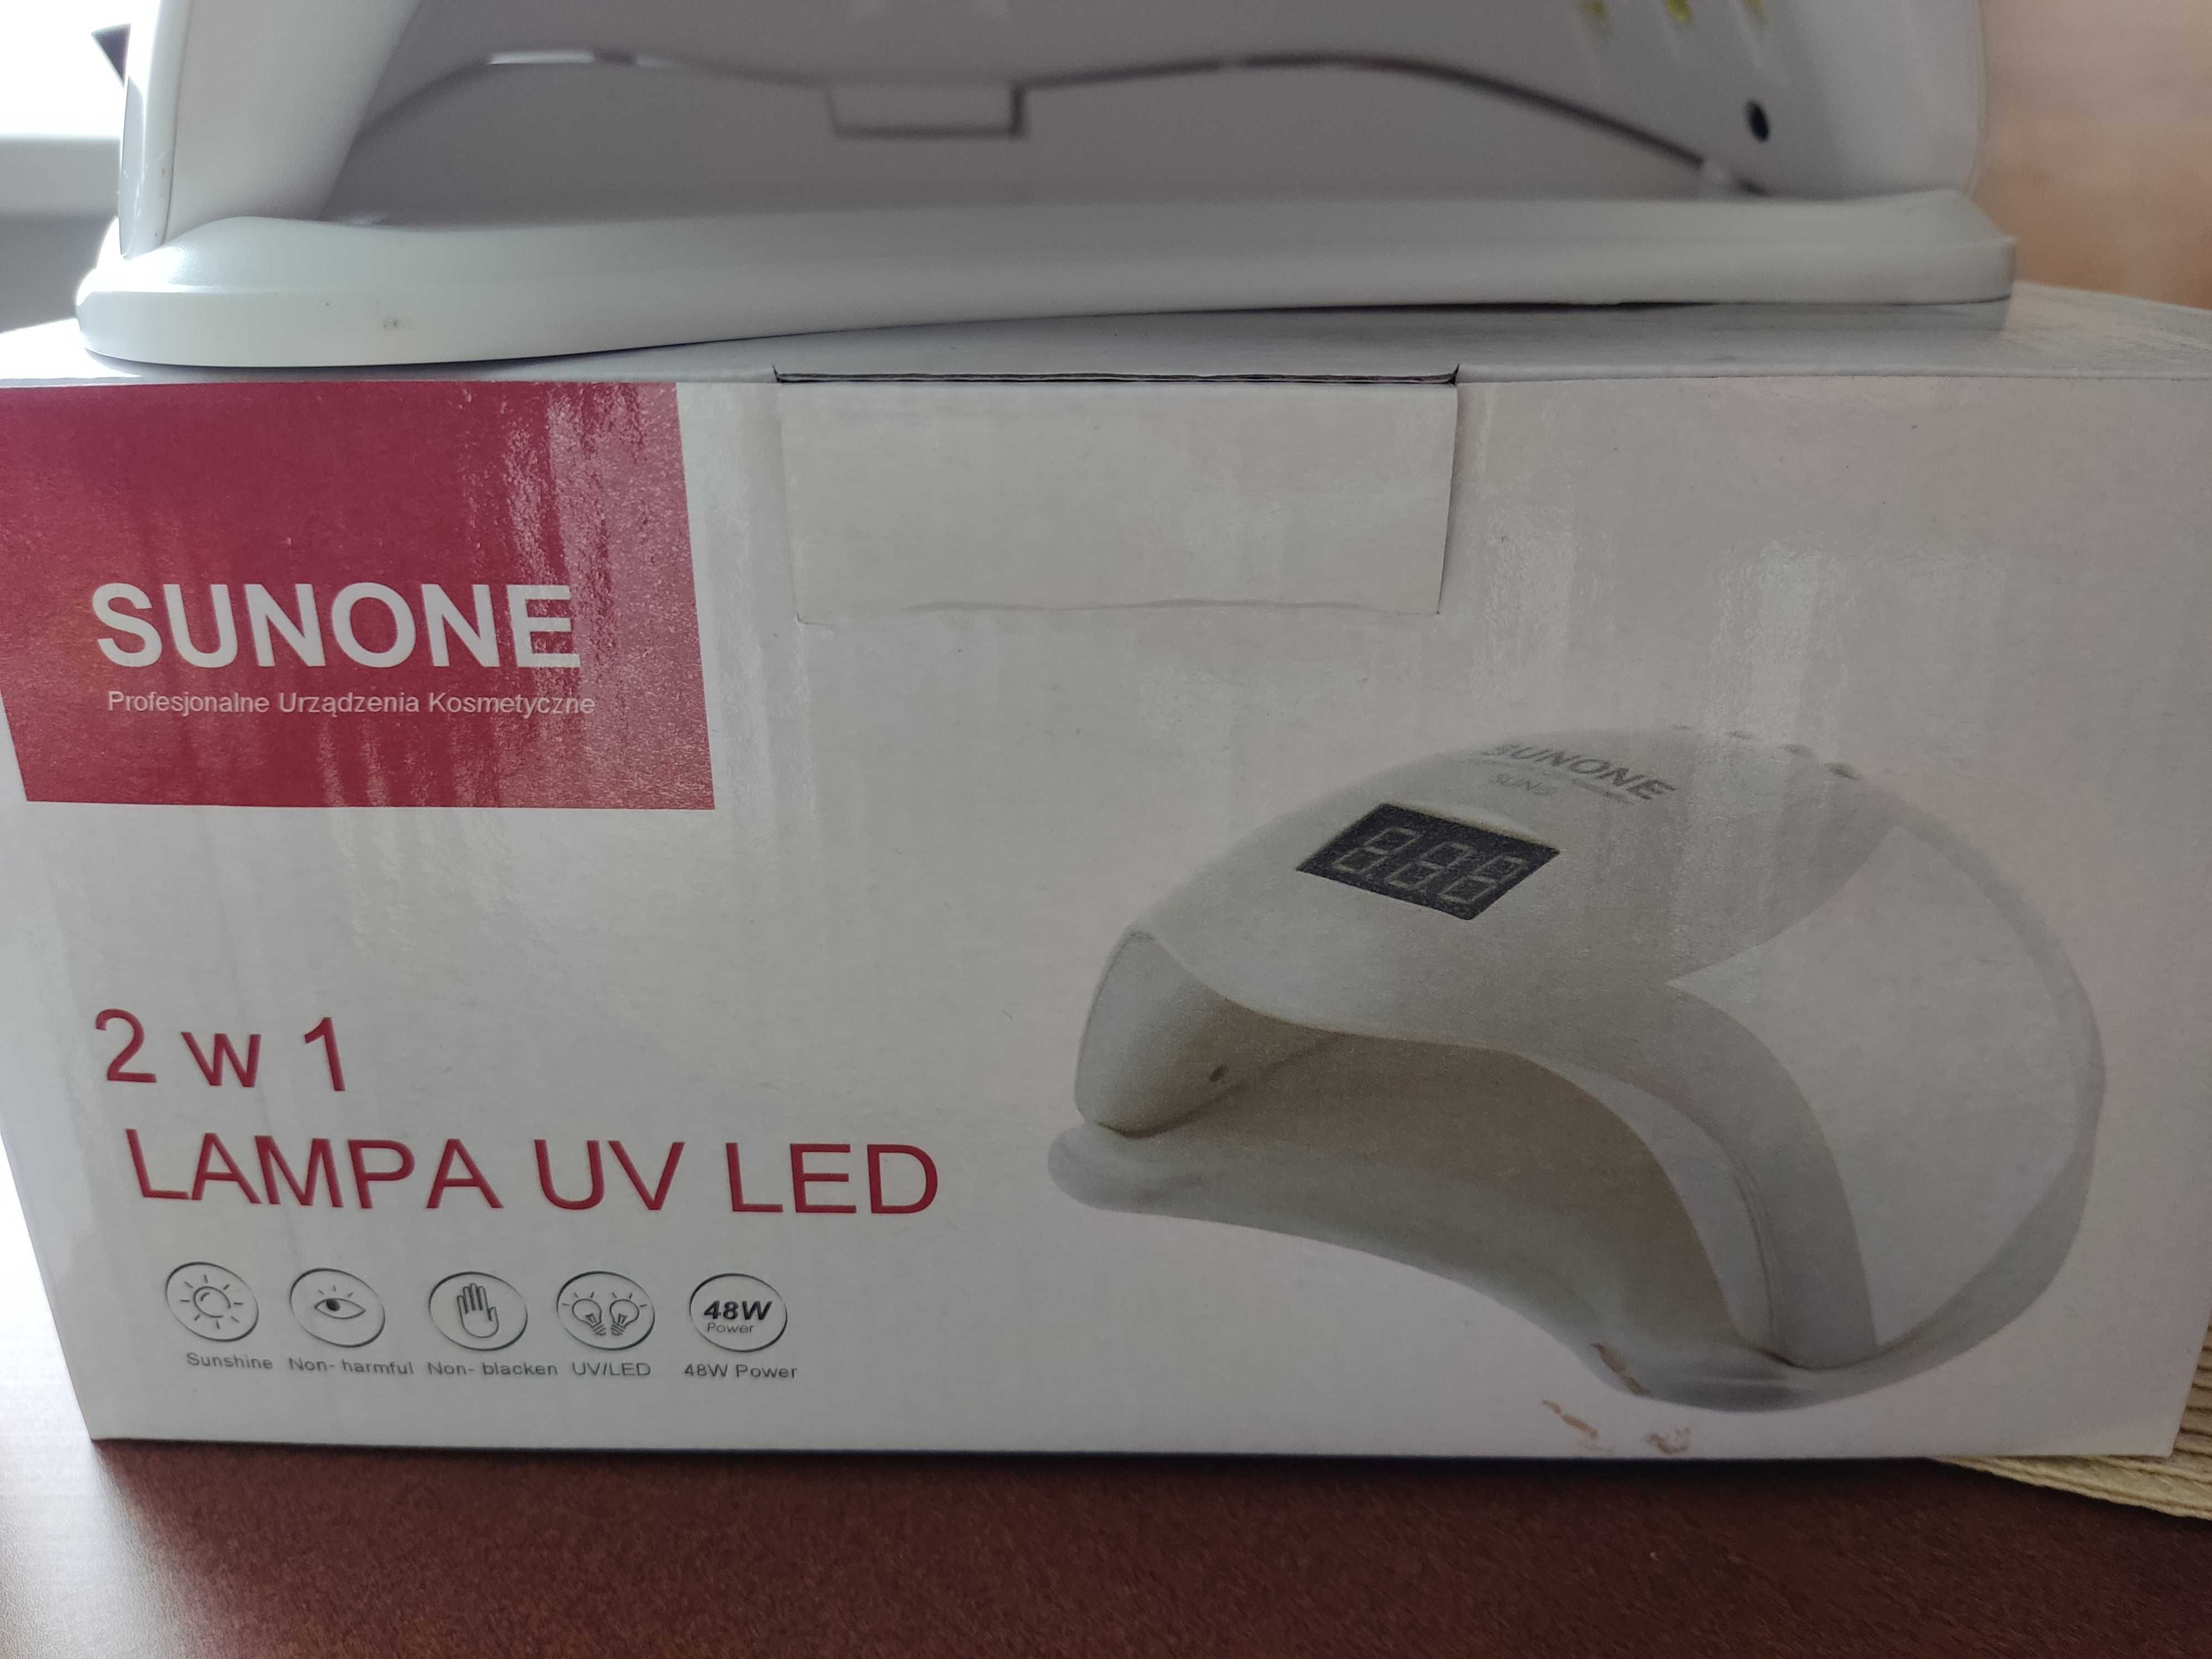 Lampa UV LED + bazy, topy, lakiery, akcesoria.